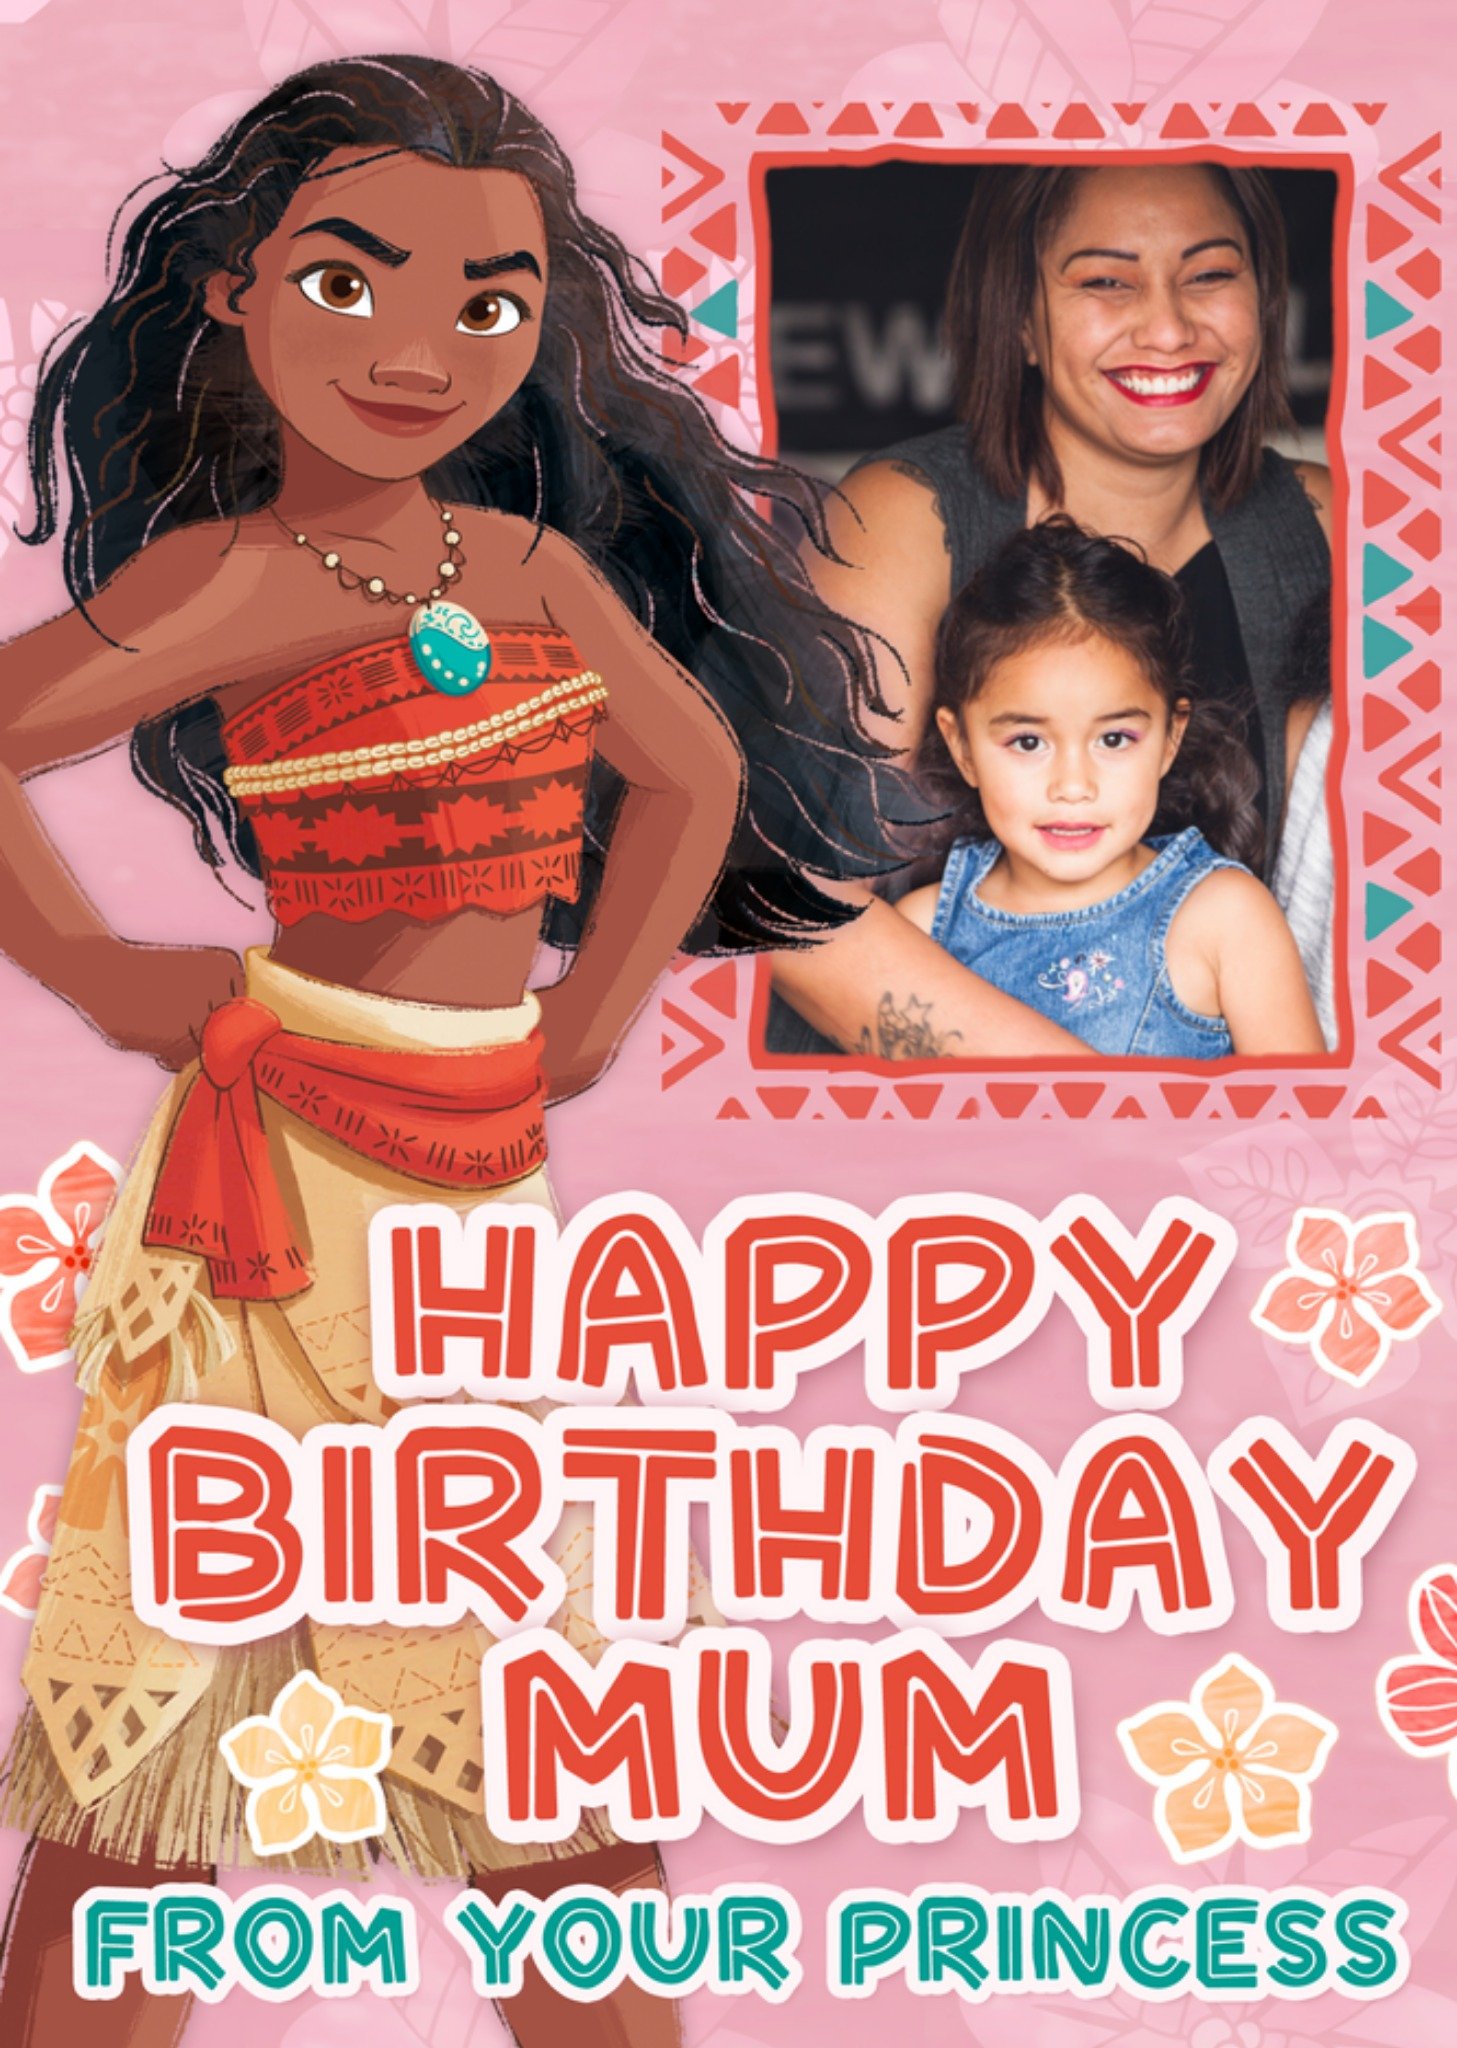 Moana Disney From Your Princess Mum Photo Upload Birthday Card, Large